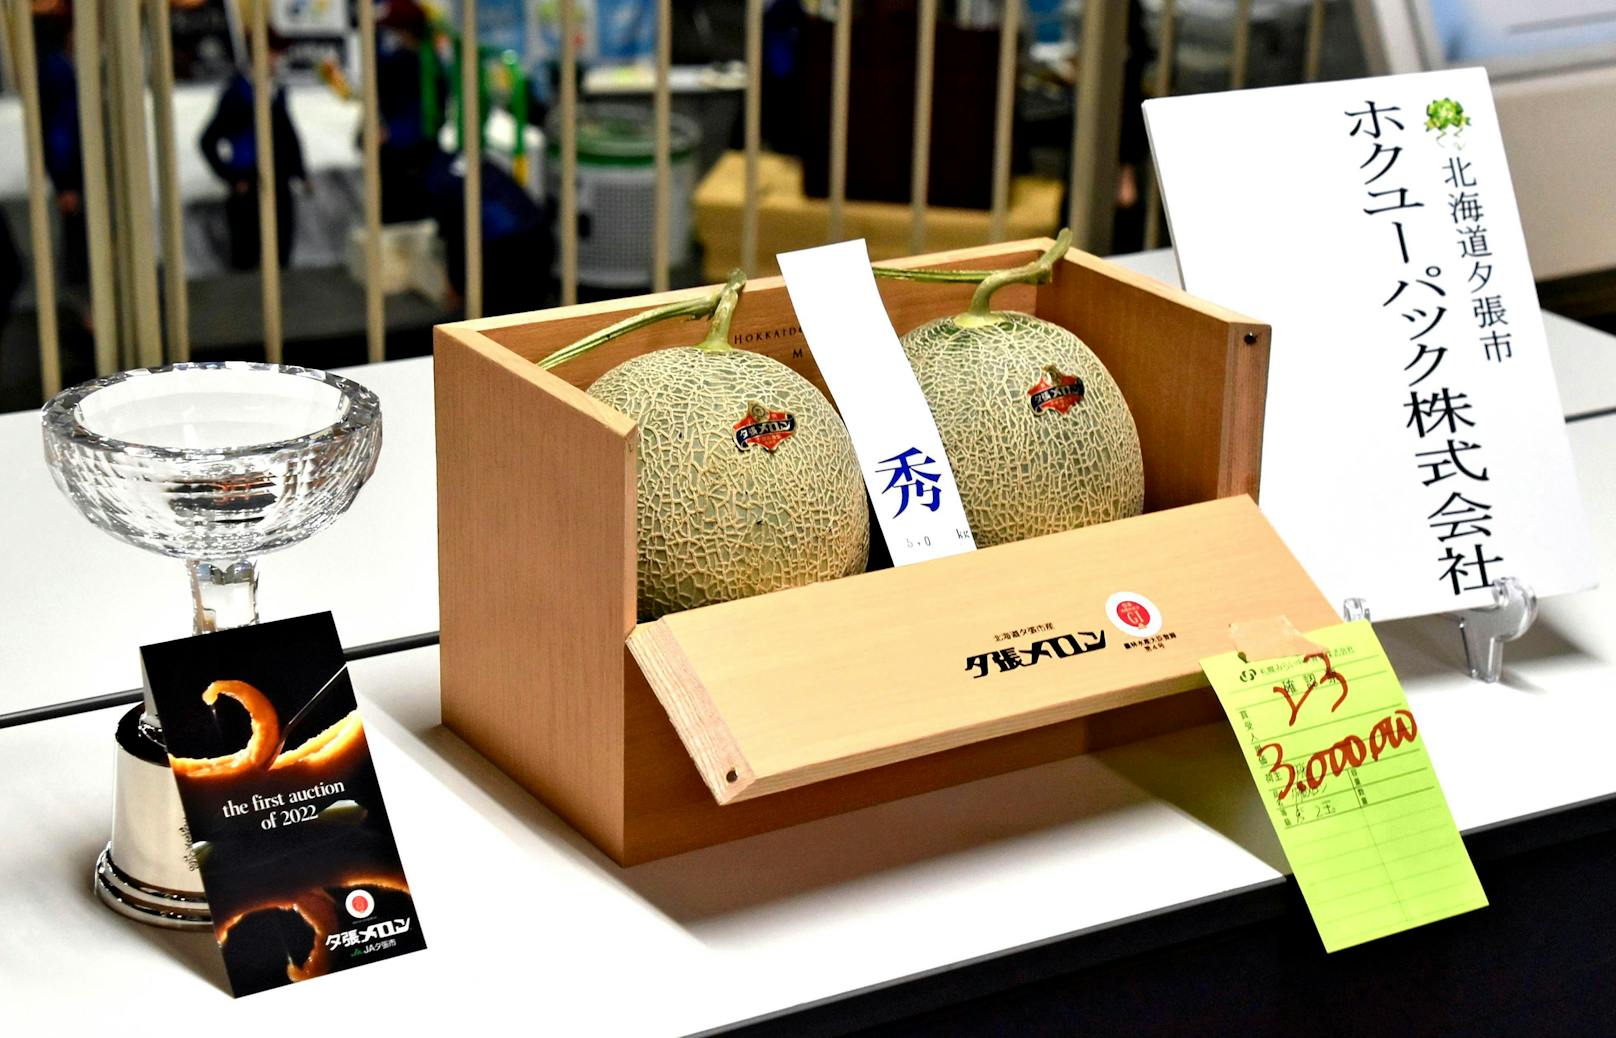 Die berühmten japanischen Yubari-Melonen.